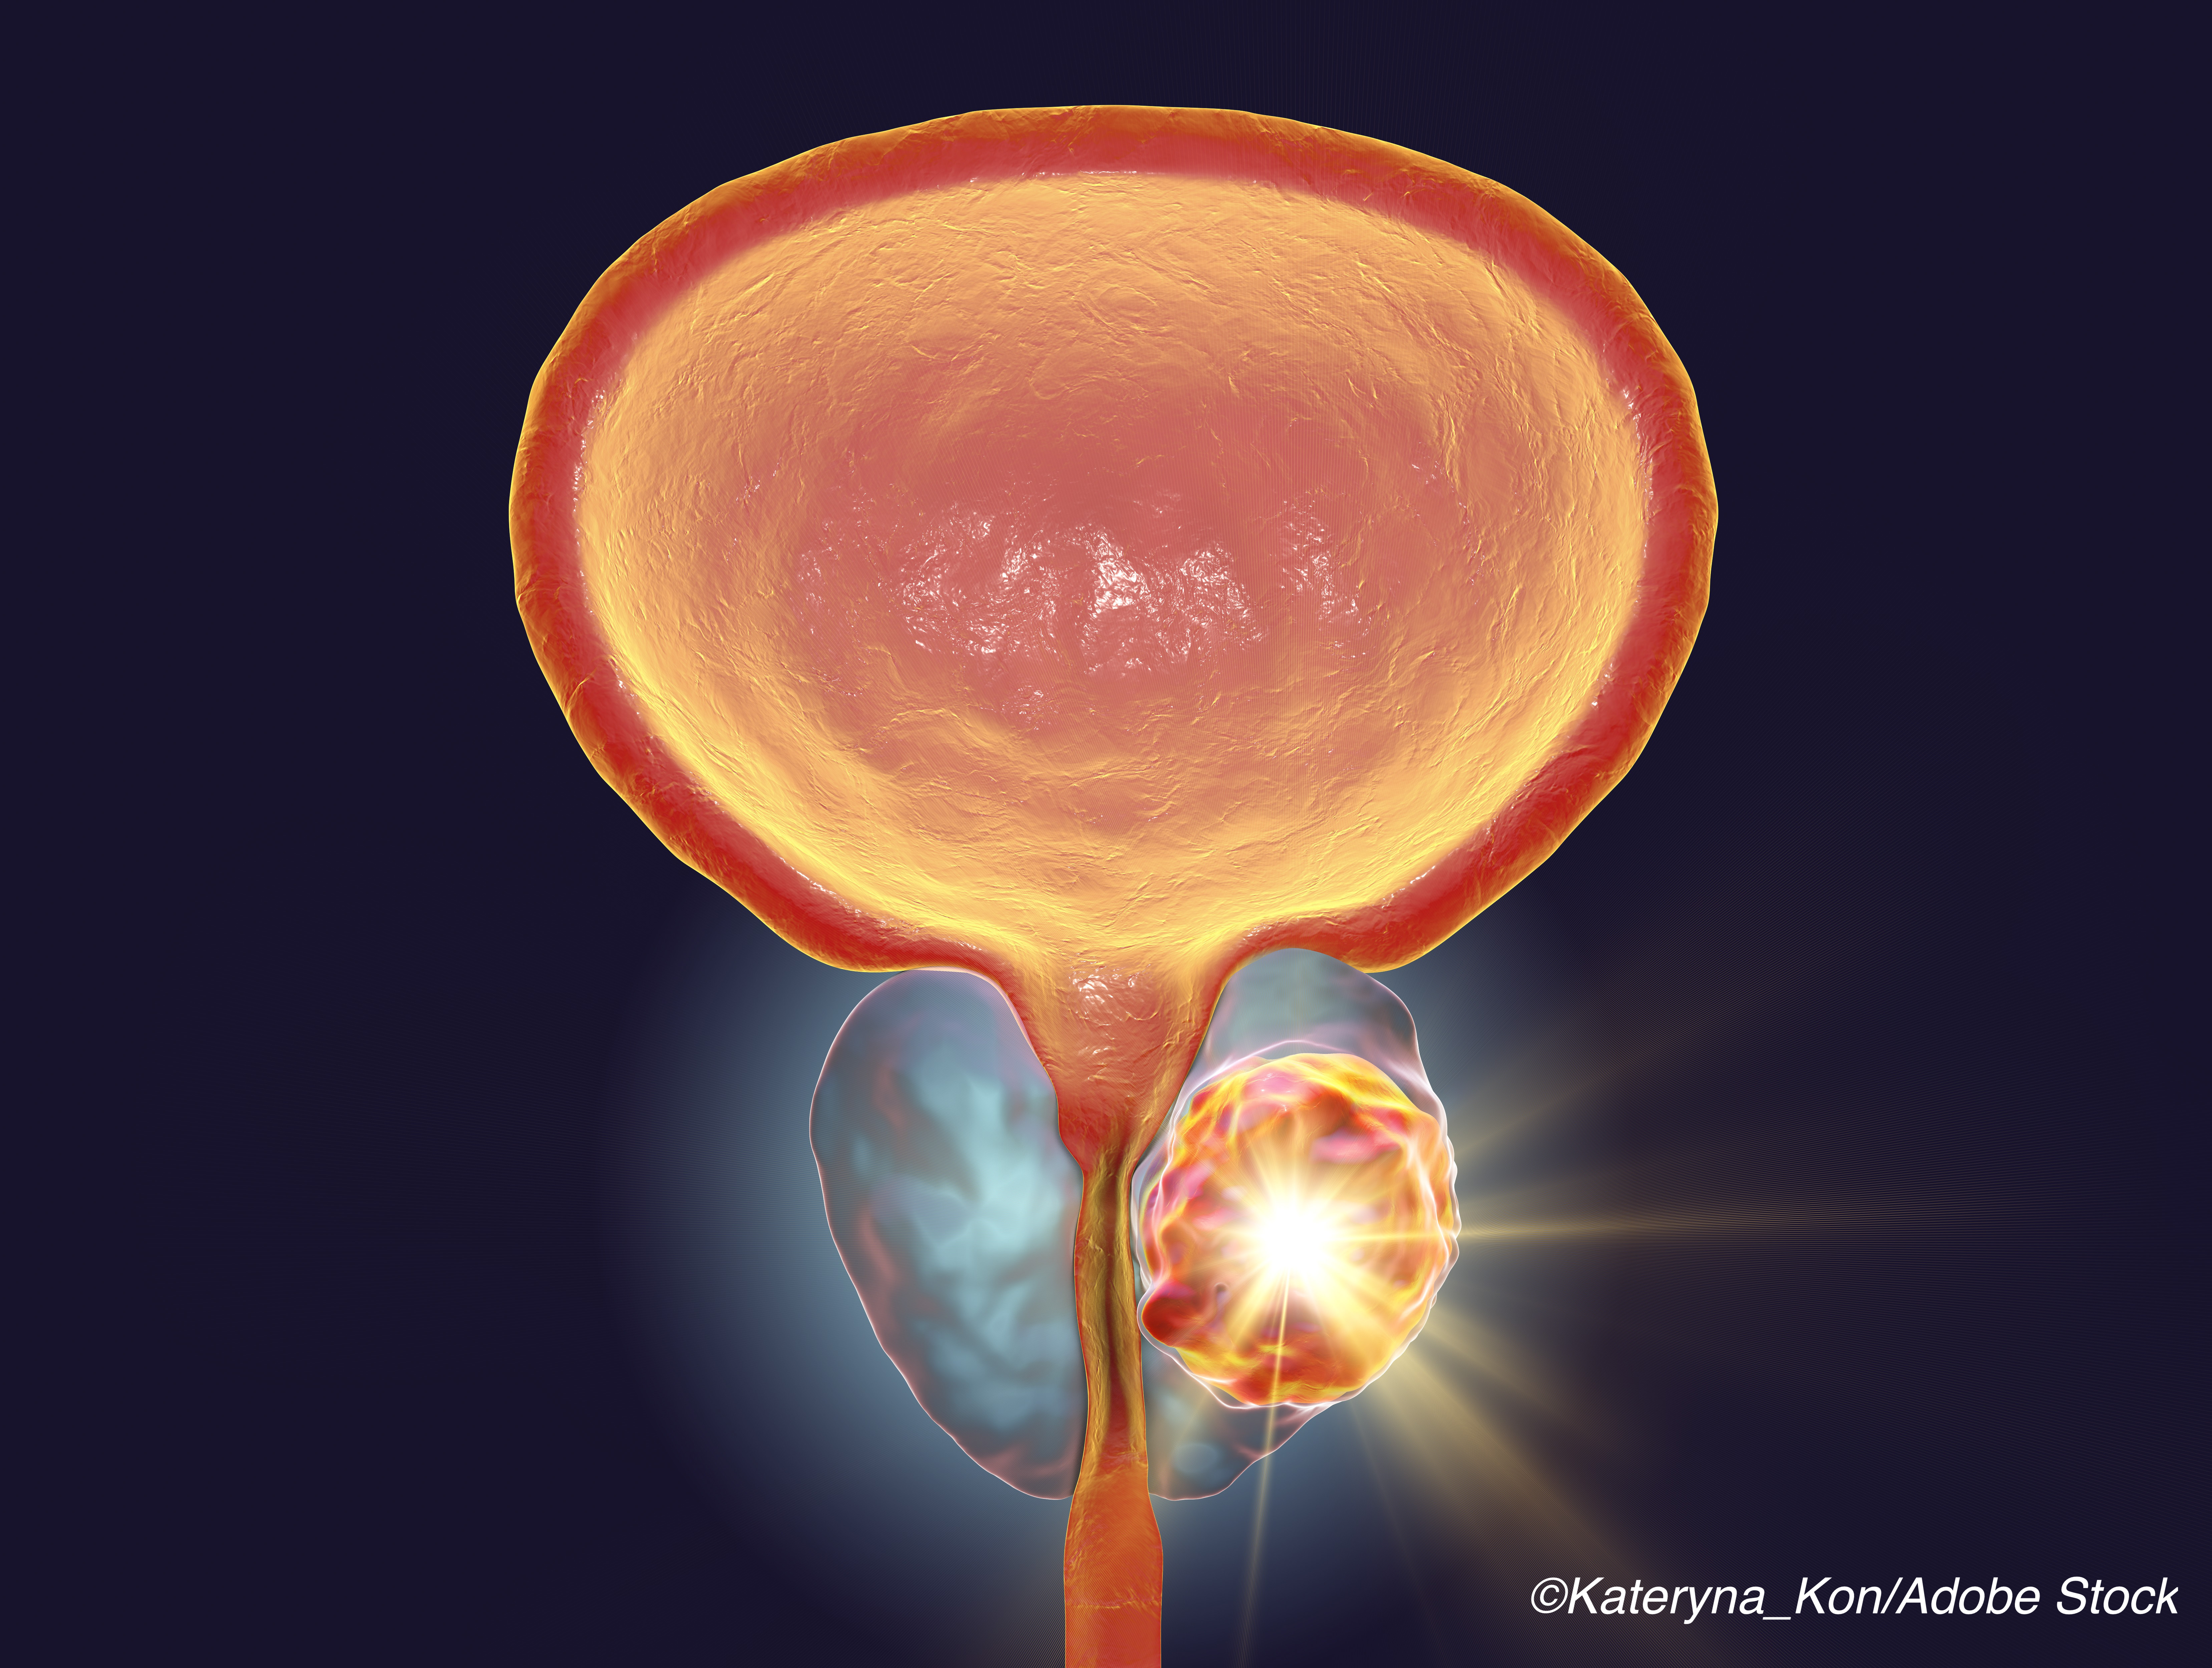 Prostate Ca: Can Standard/MRI-Targeted Biopsy Combo Cut Unnecessary Biopsies?